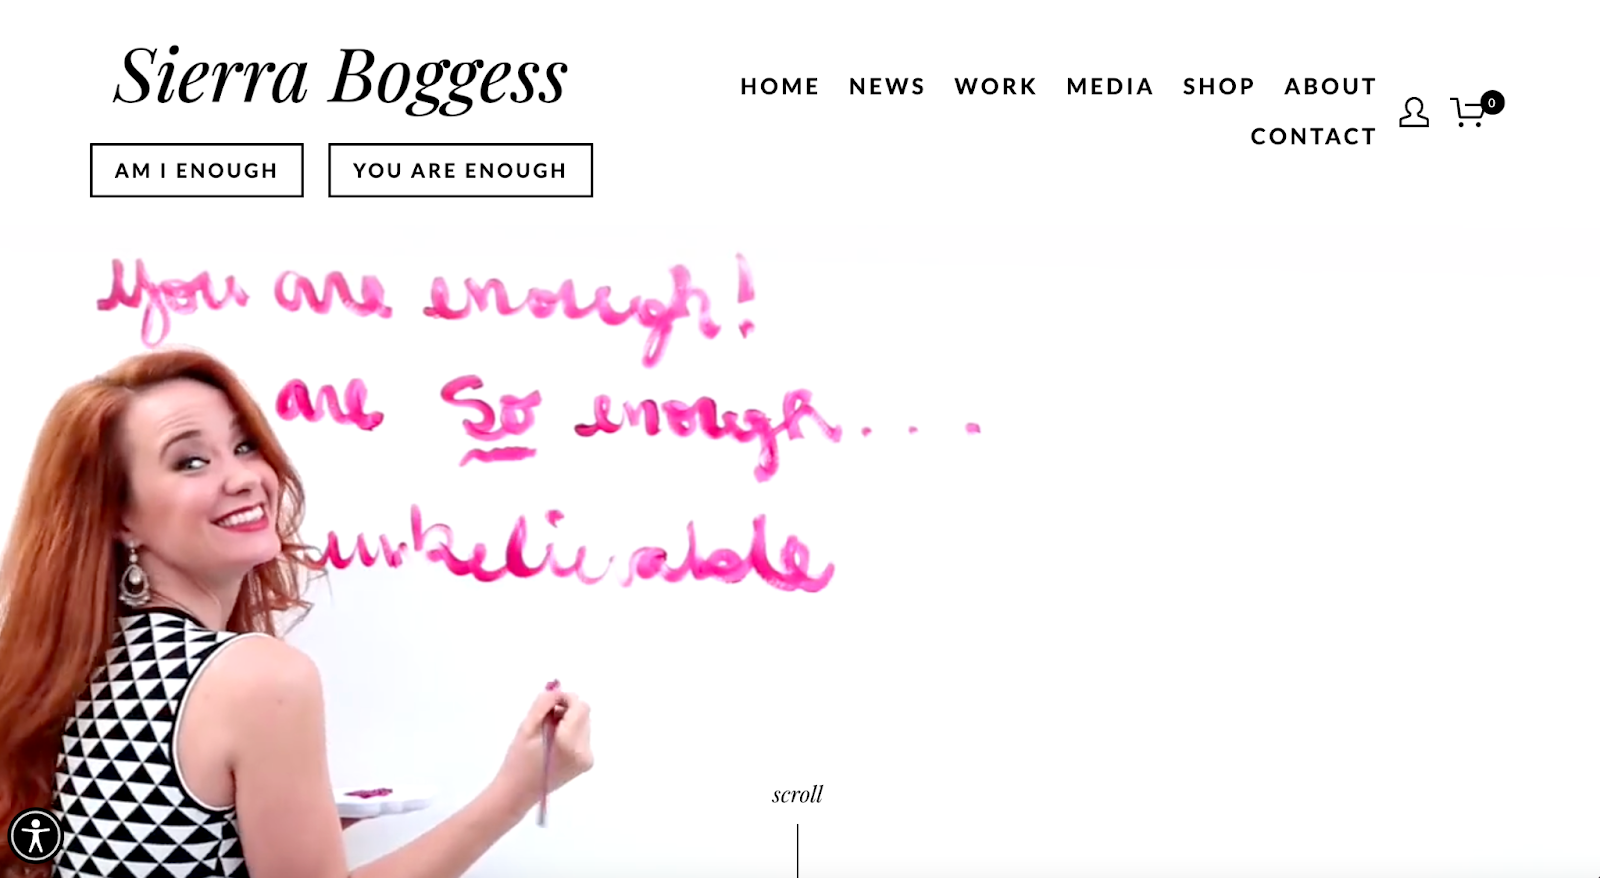 Sierra Boggess, actor website example